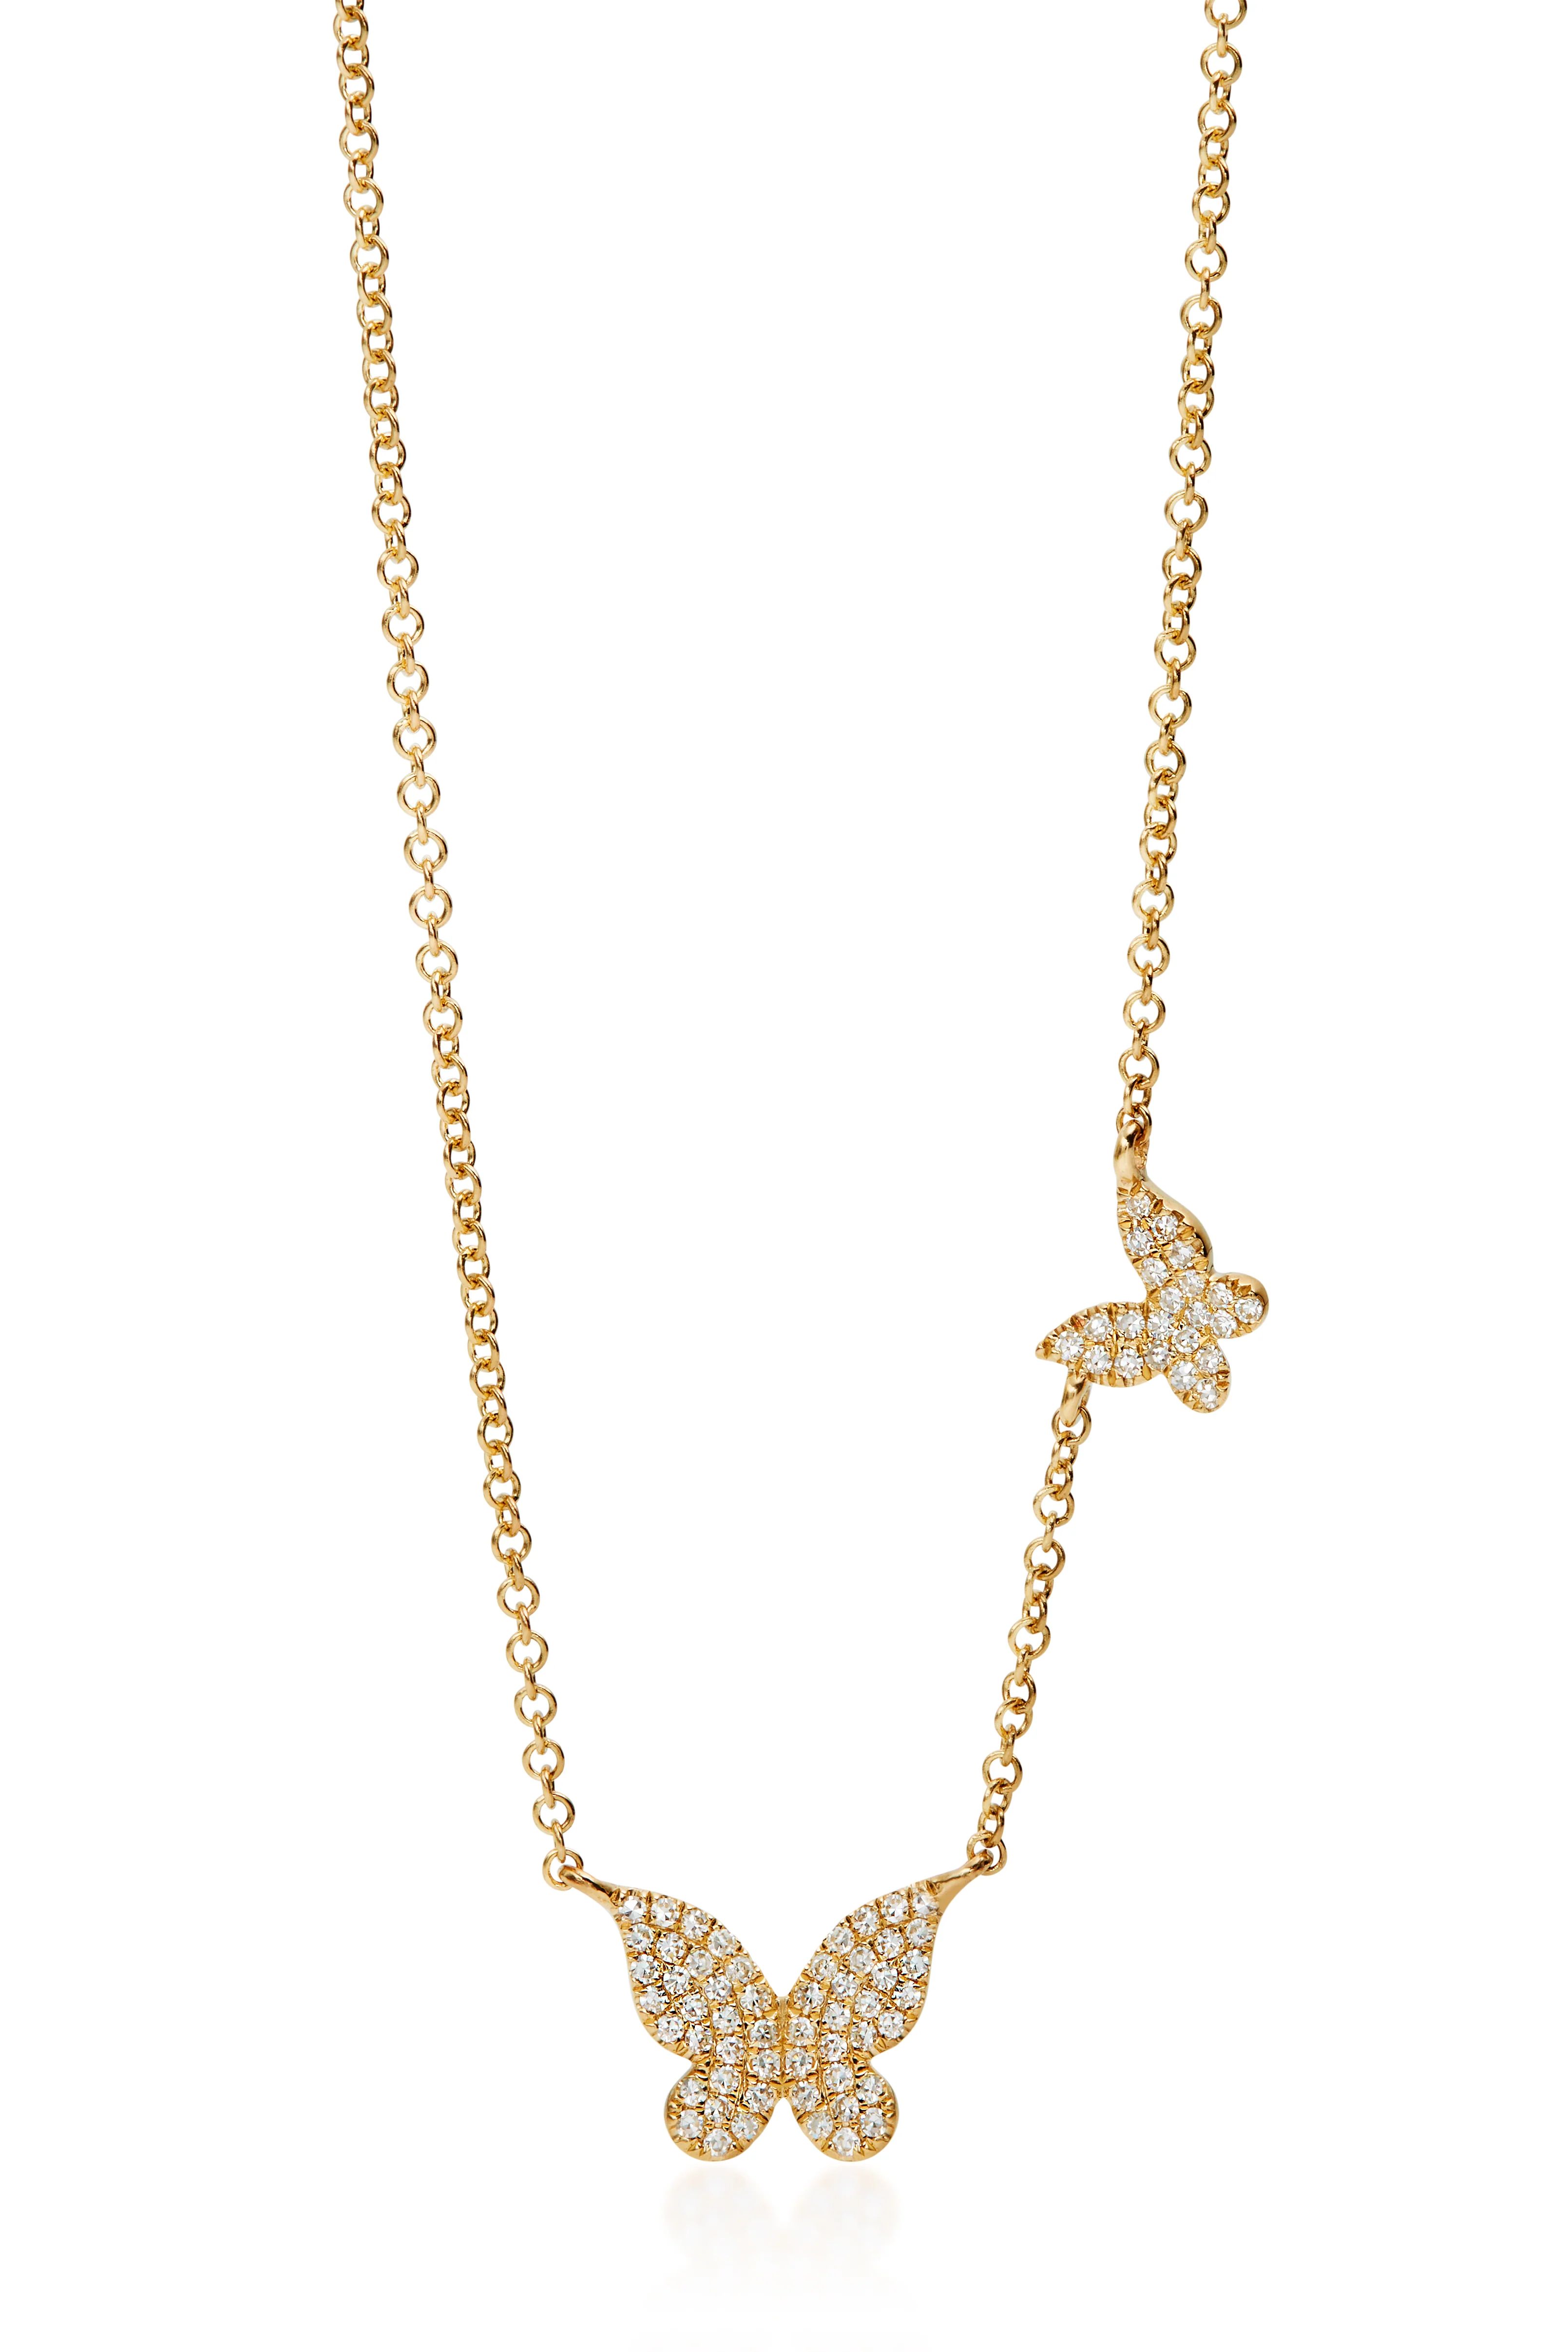 14KY Butterfly Diamond Necklace | Susan Saffron Jewelry